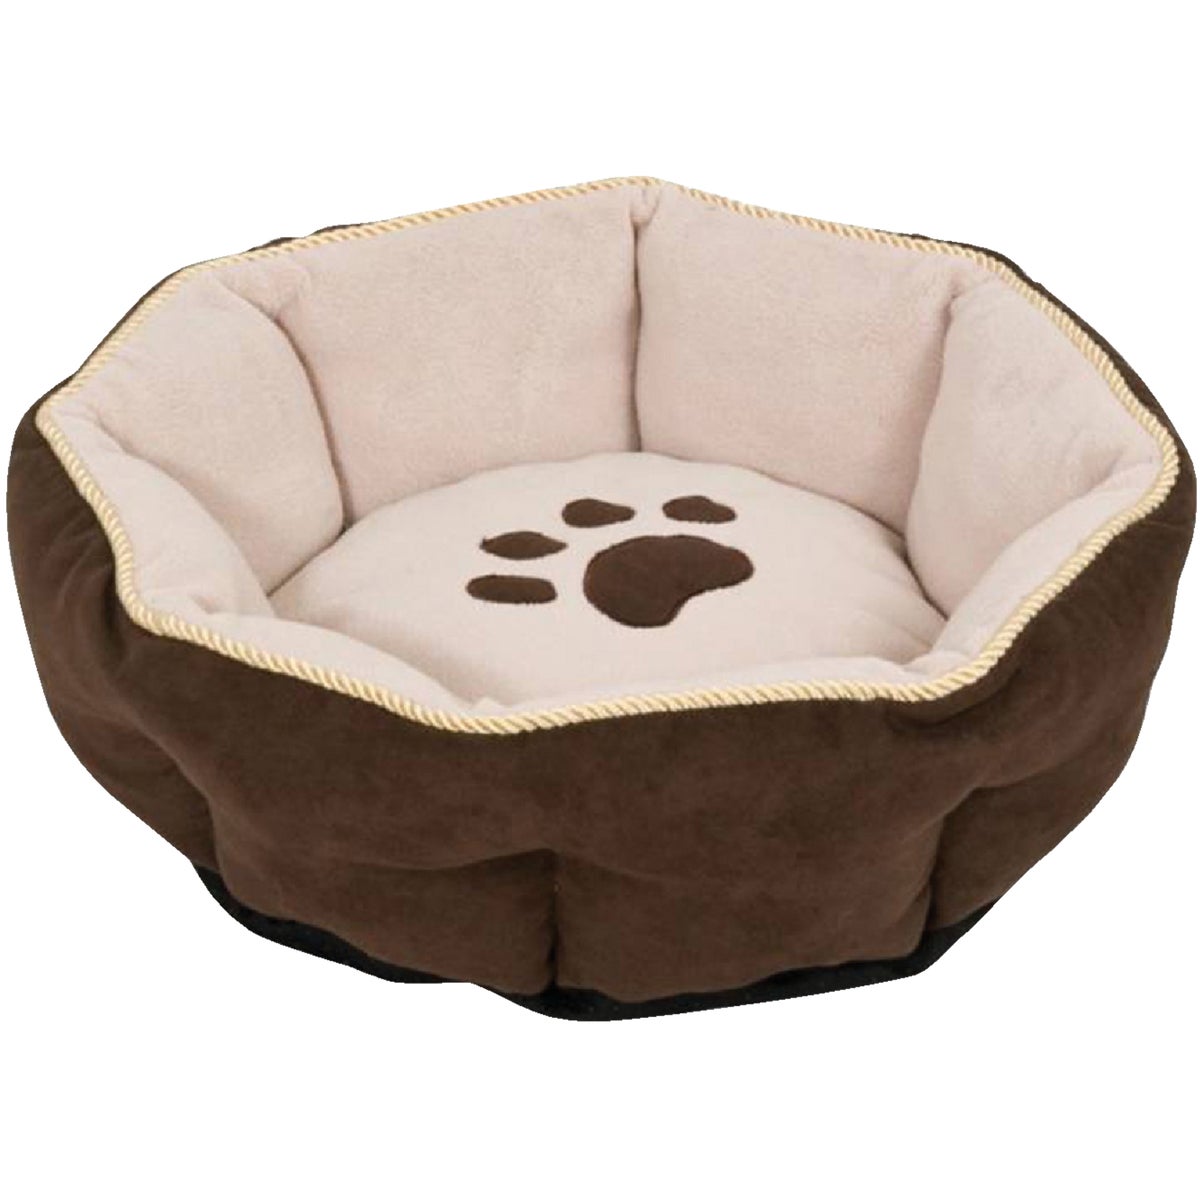 Item 800475, Round, plush animal print pet bed.